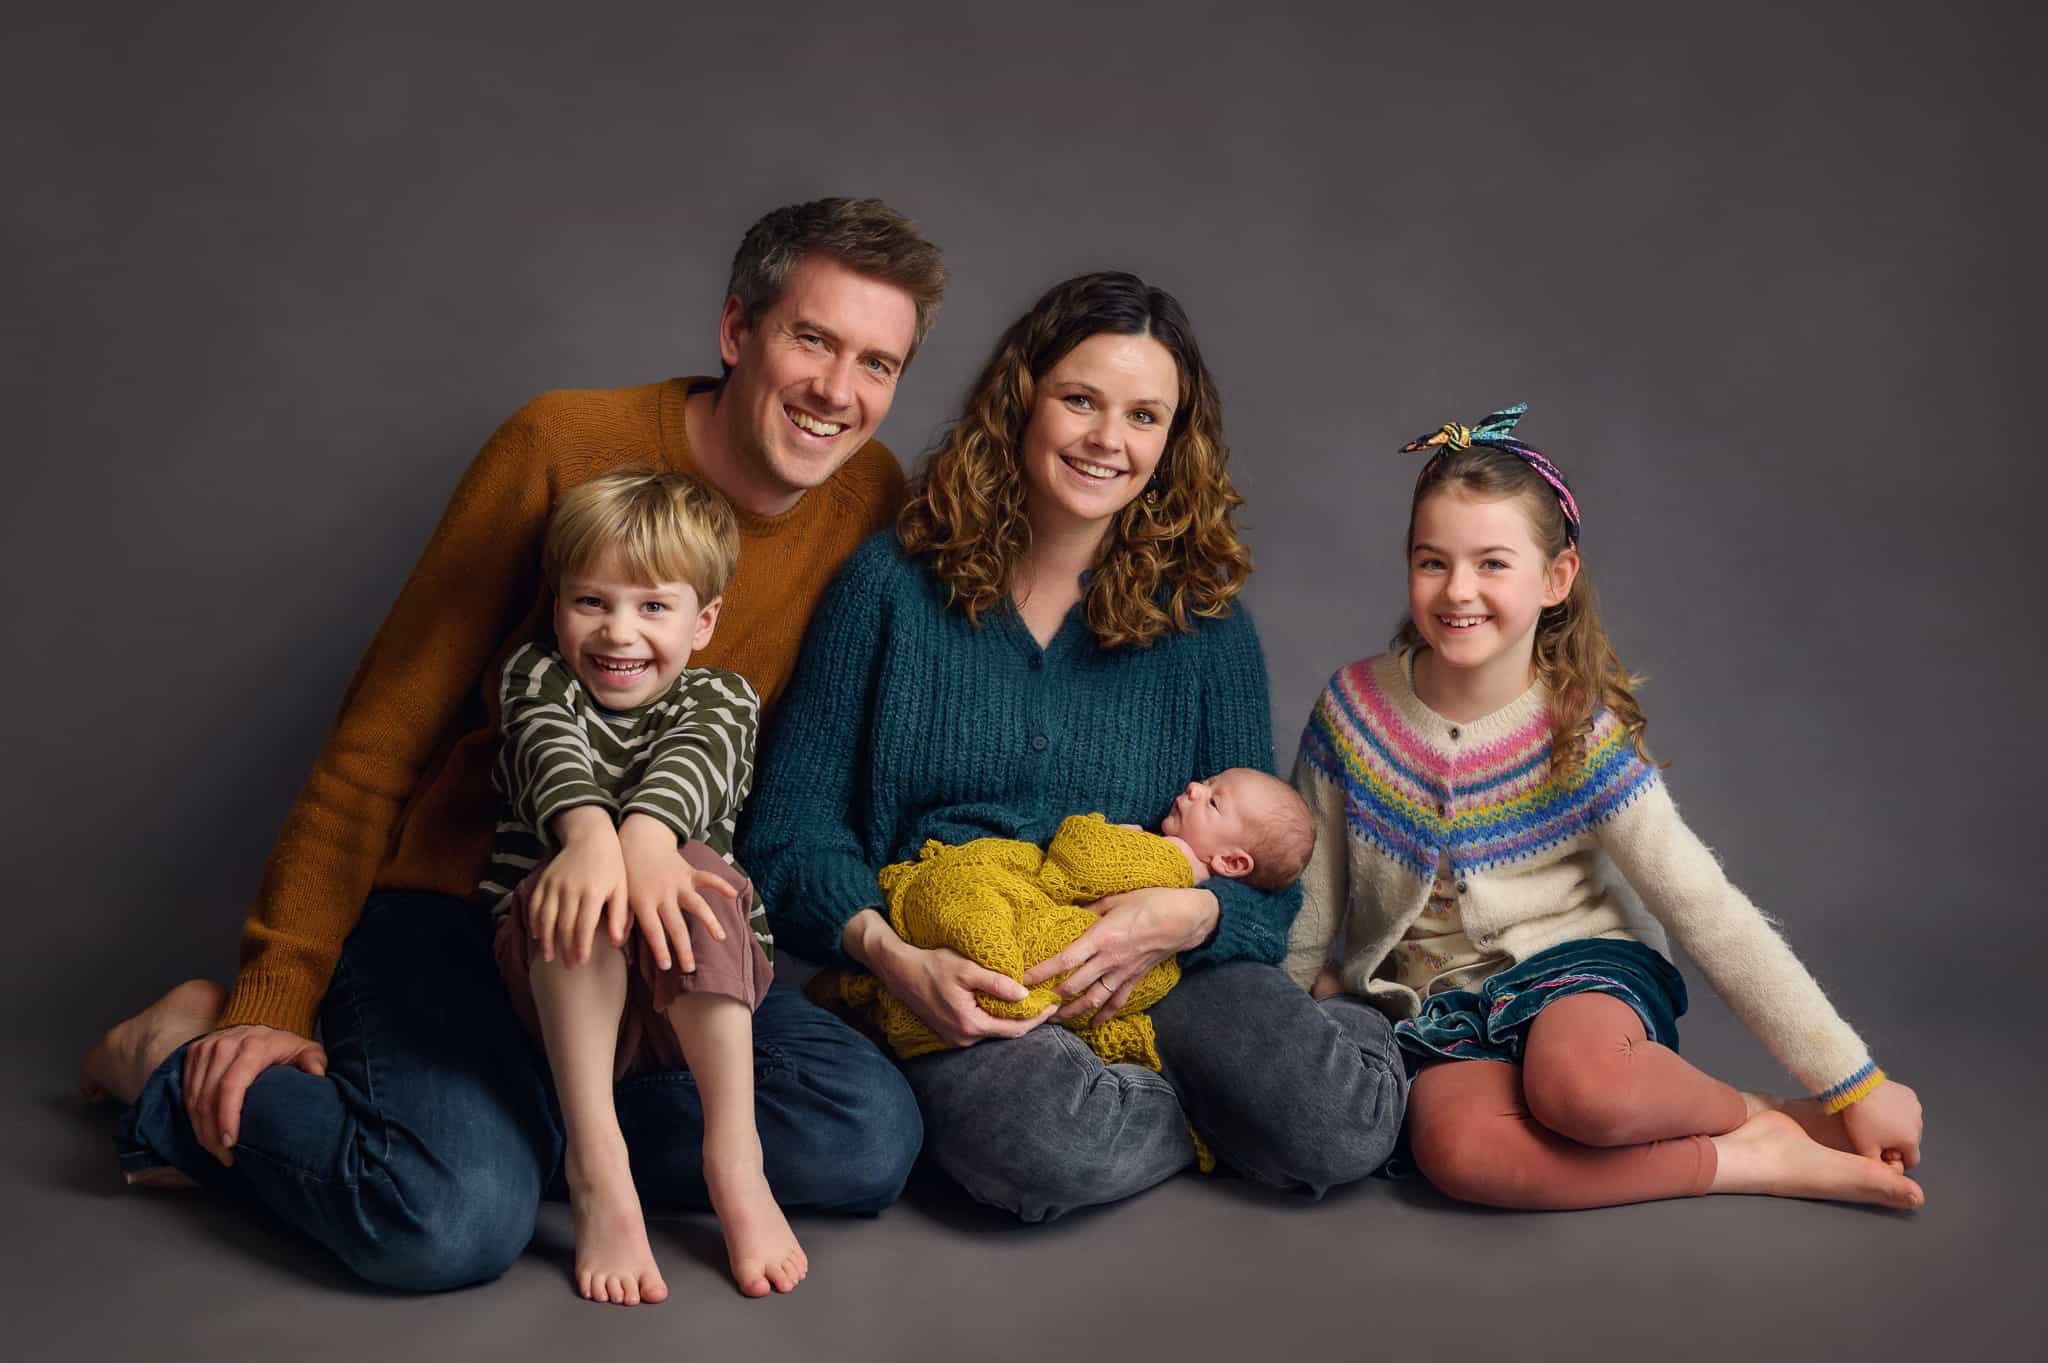 studio family portrait with newborn baby on grey background